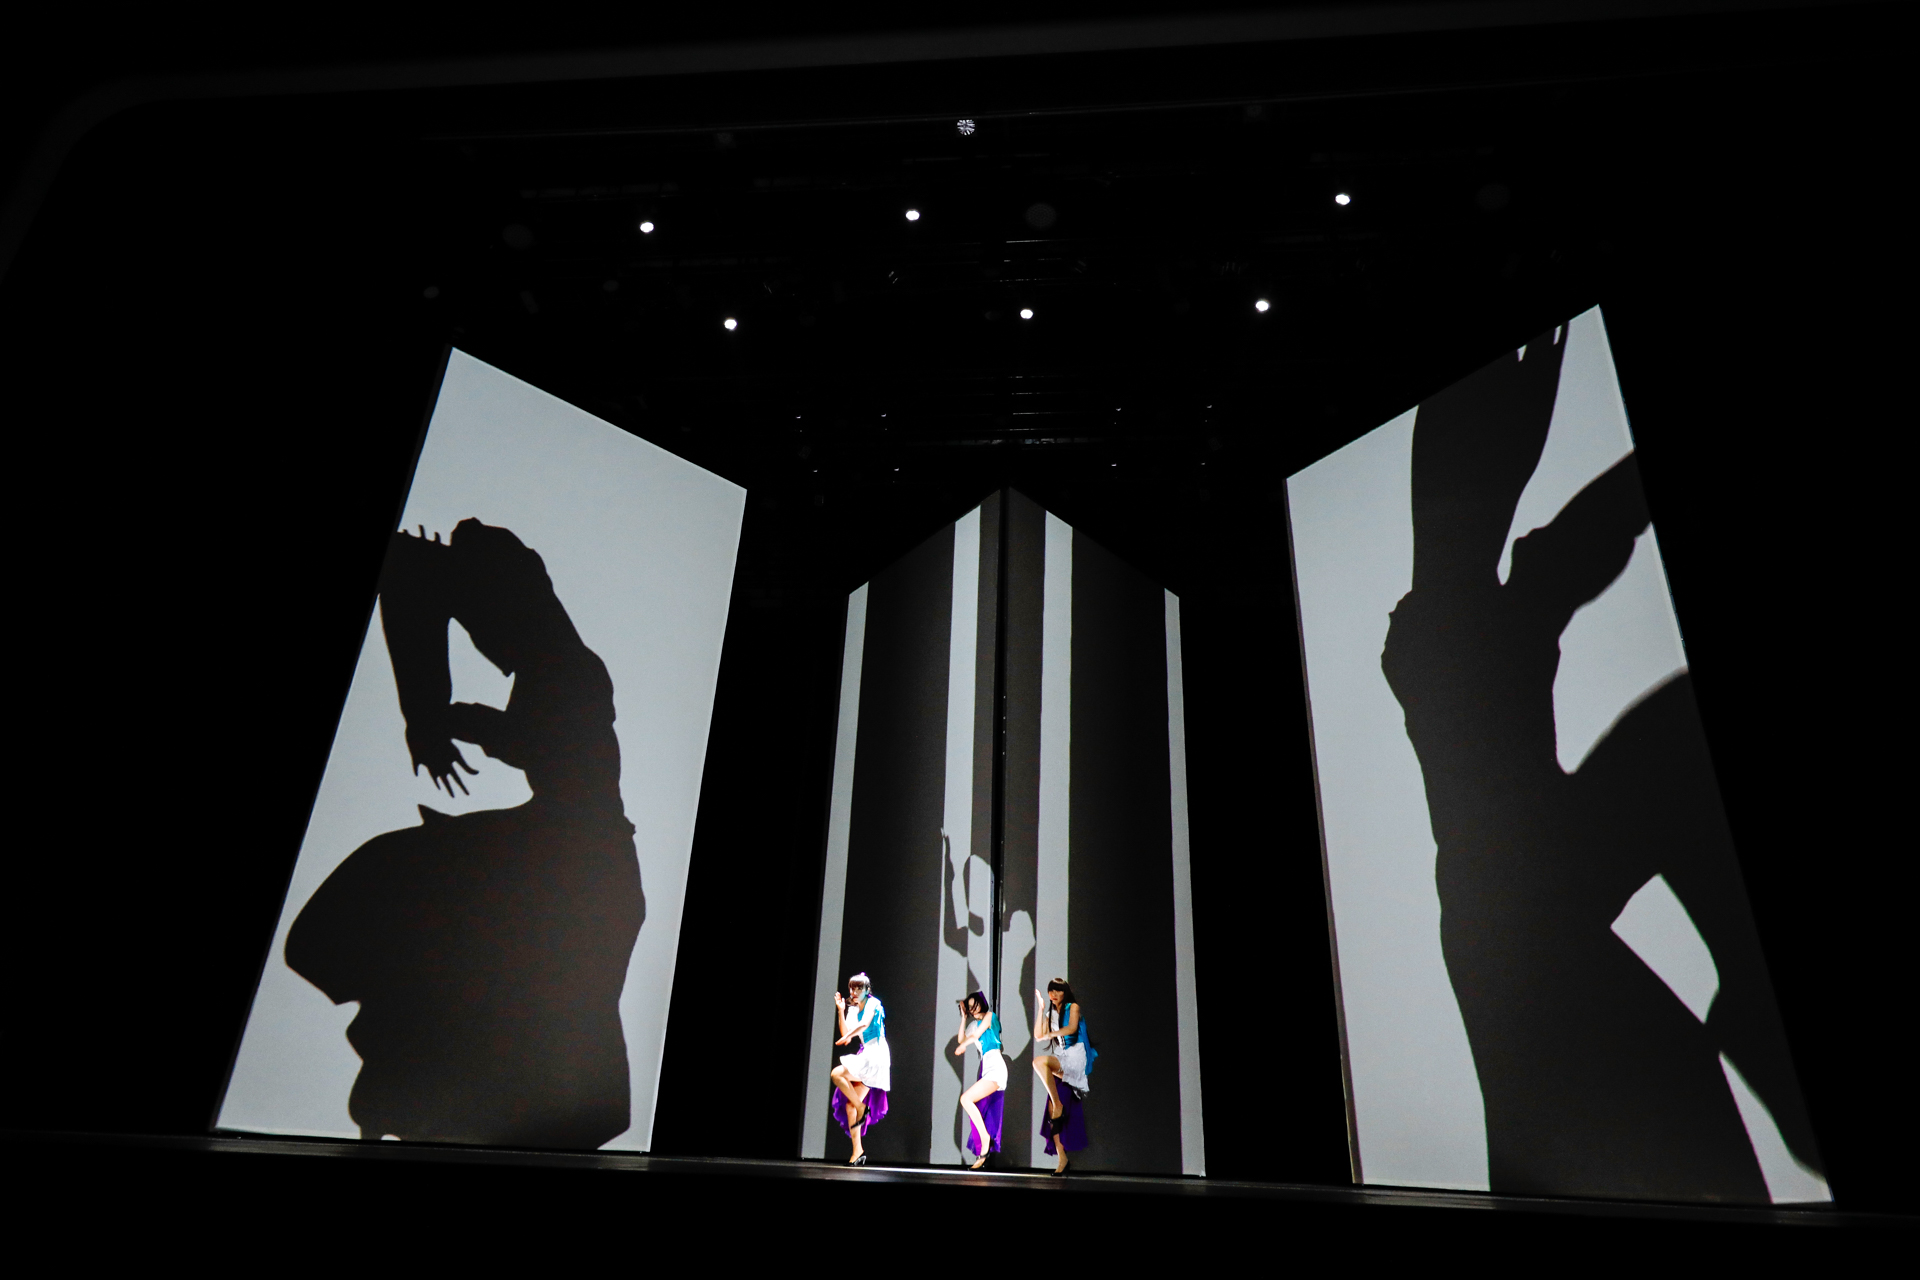 Perfume x Technology presents Reframe, Pertunjukan Live Penuh Keajaiban Yang Diwujudkan Oleh Canggihnya Teknologi